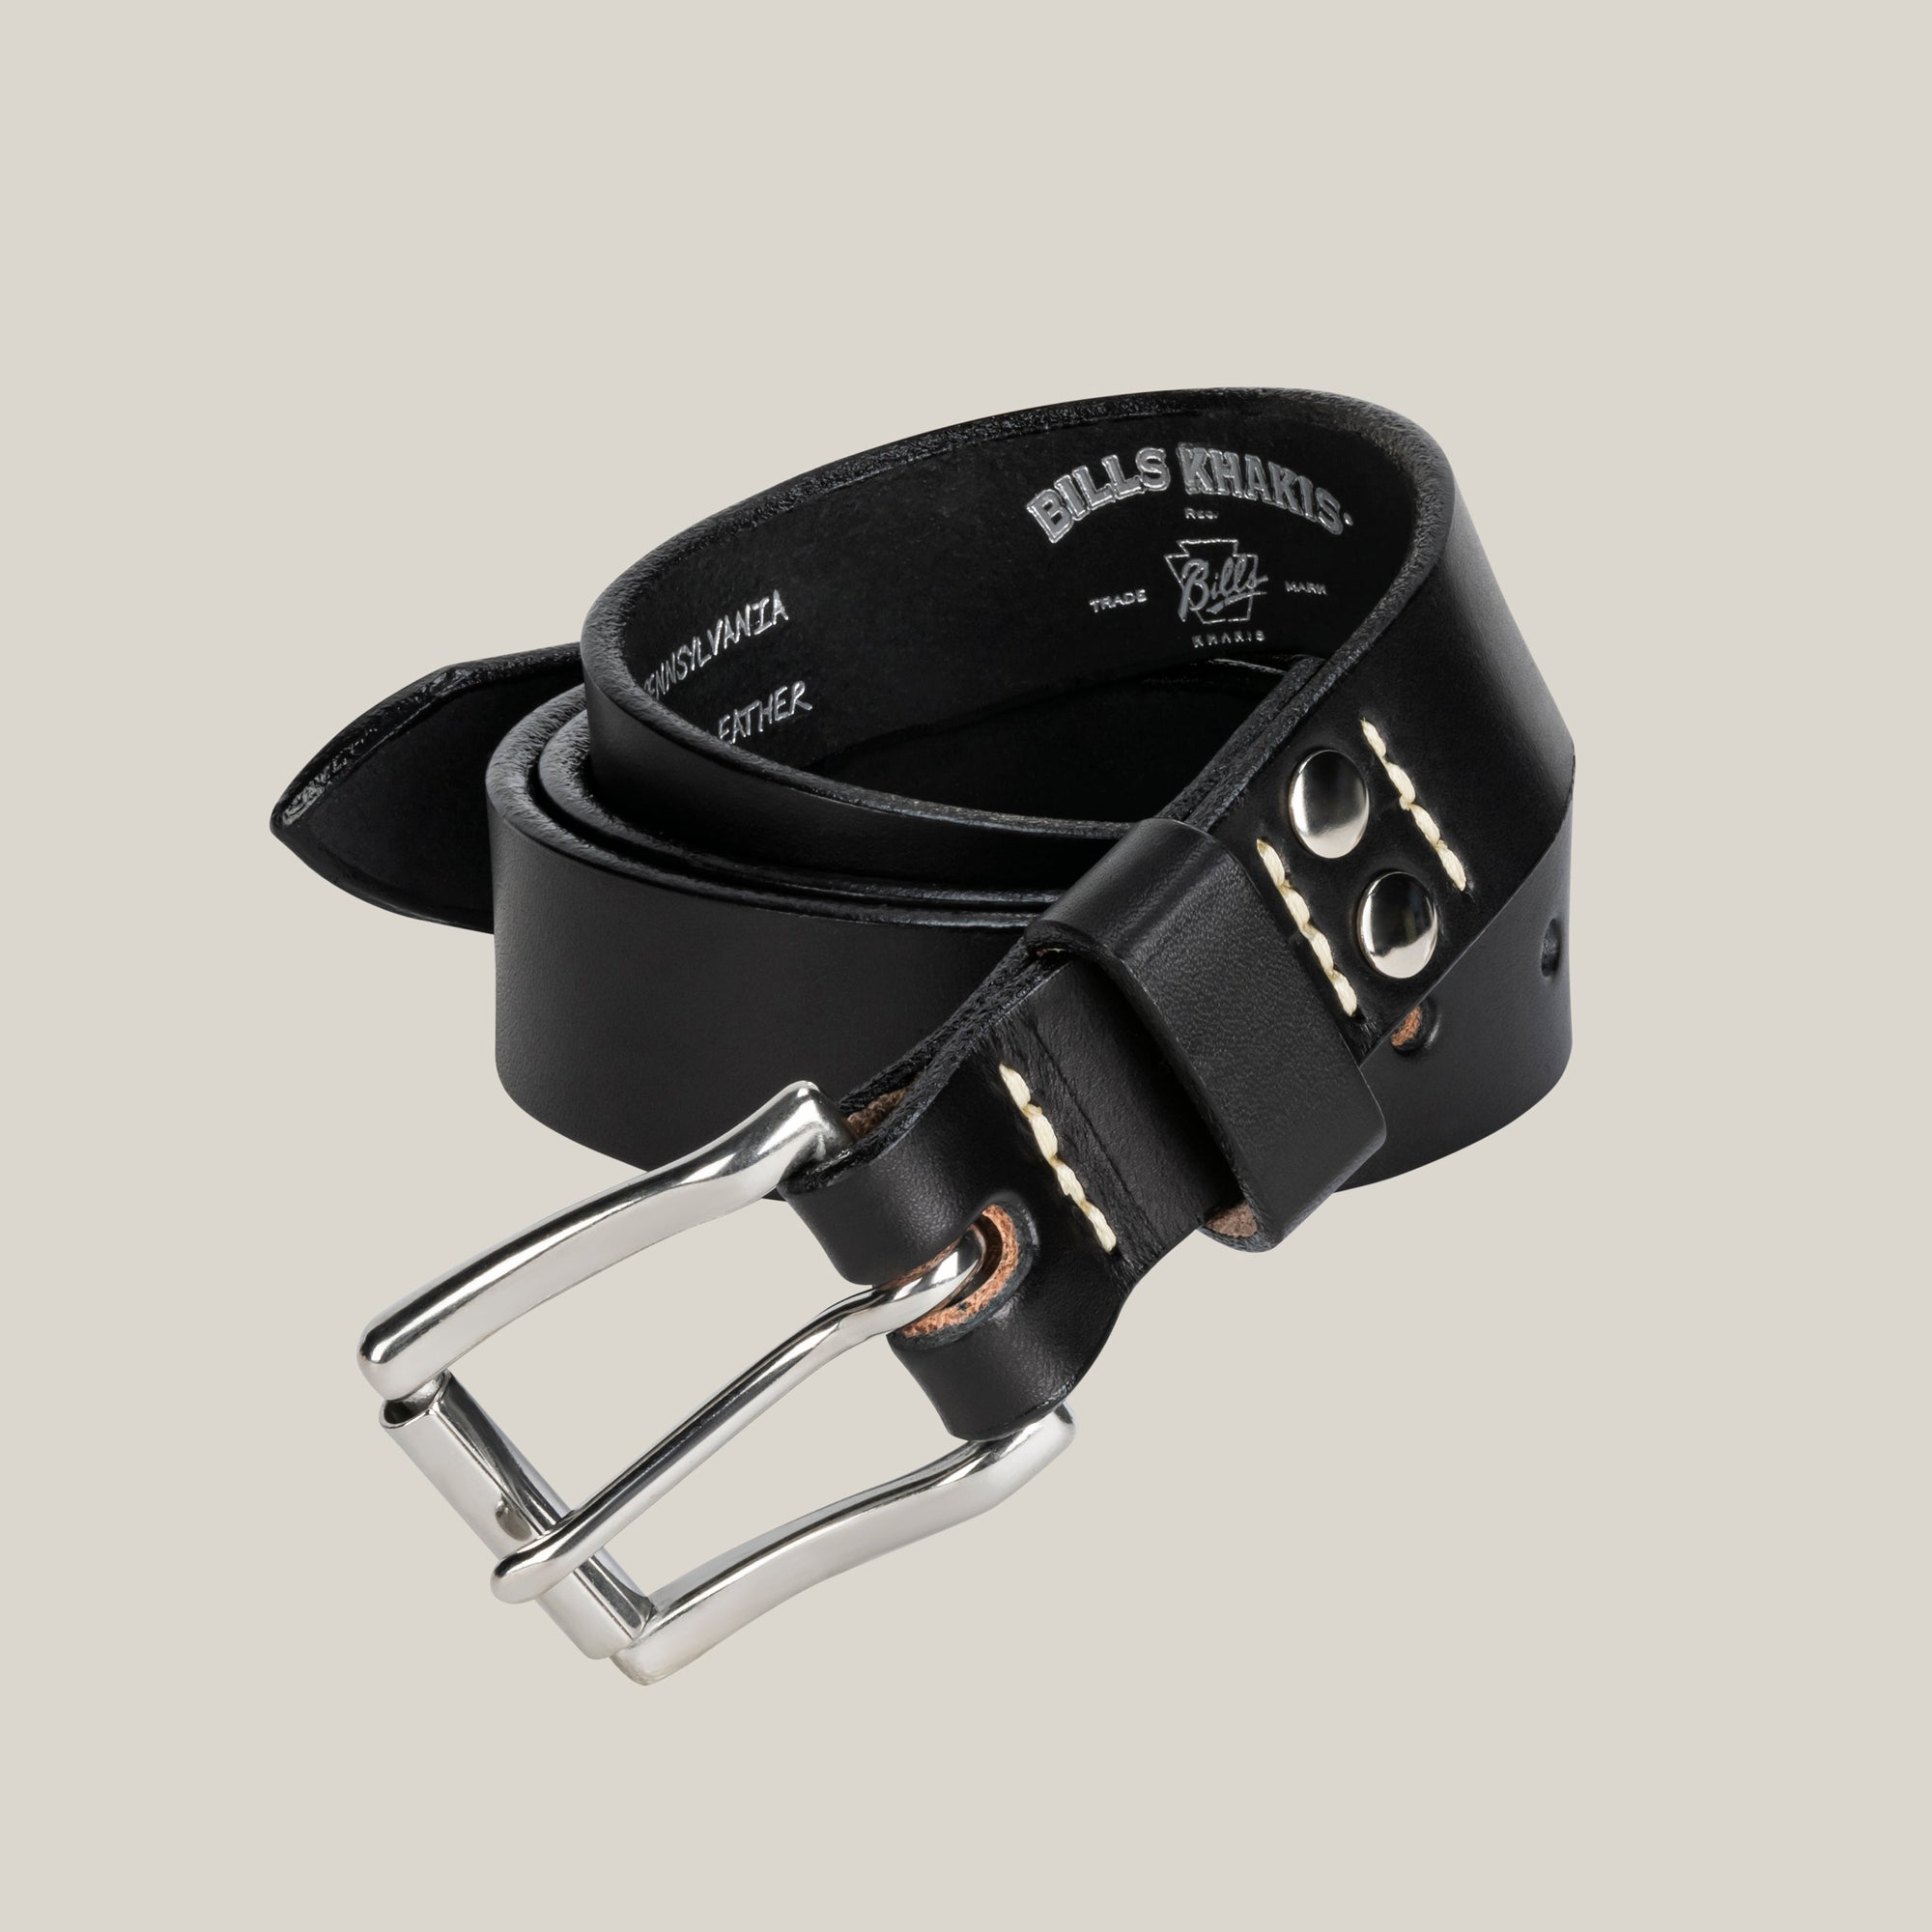 Original Bridle Leather Belt in Black by Bills Khakis